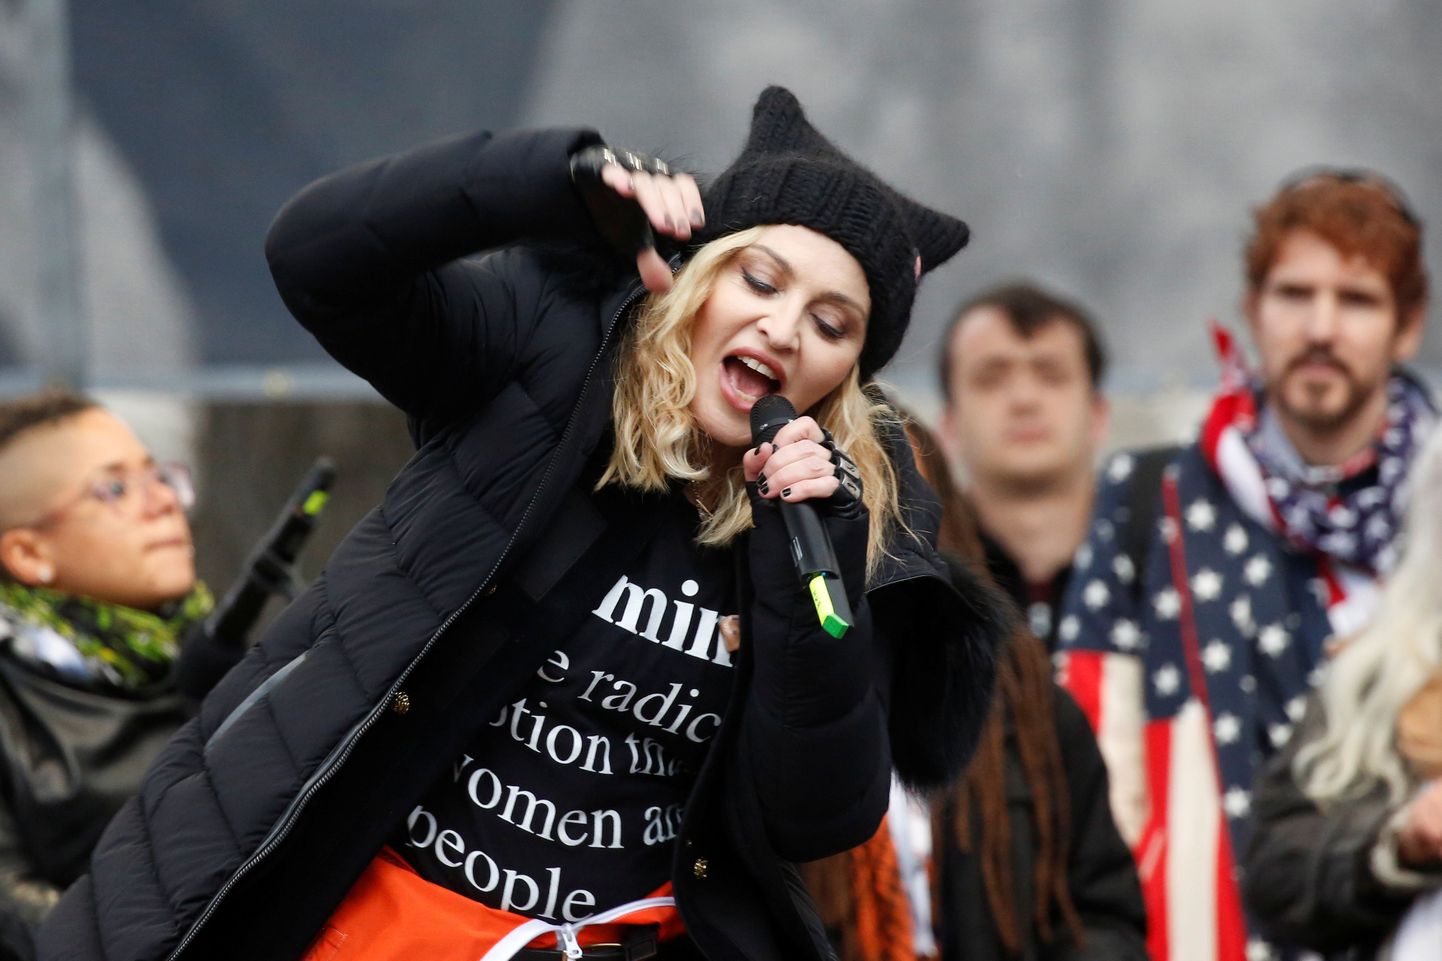 Madonna Naiste marsil kõnet pidamas.